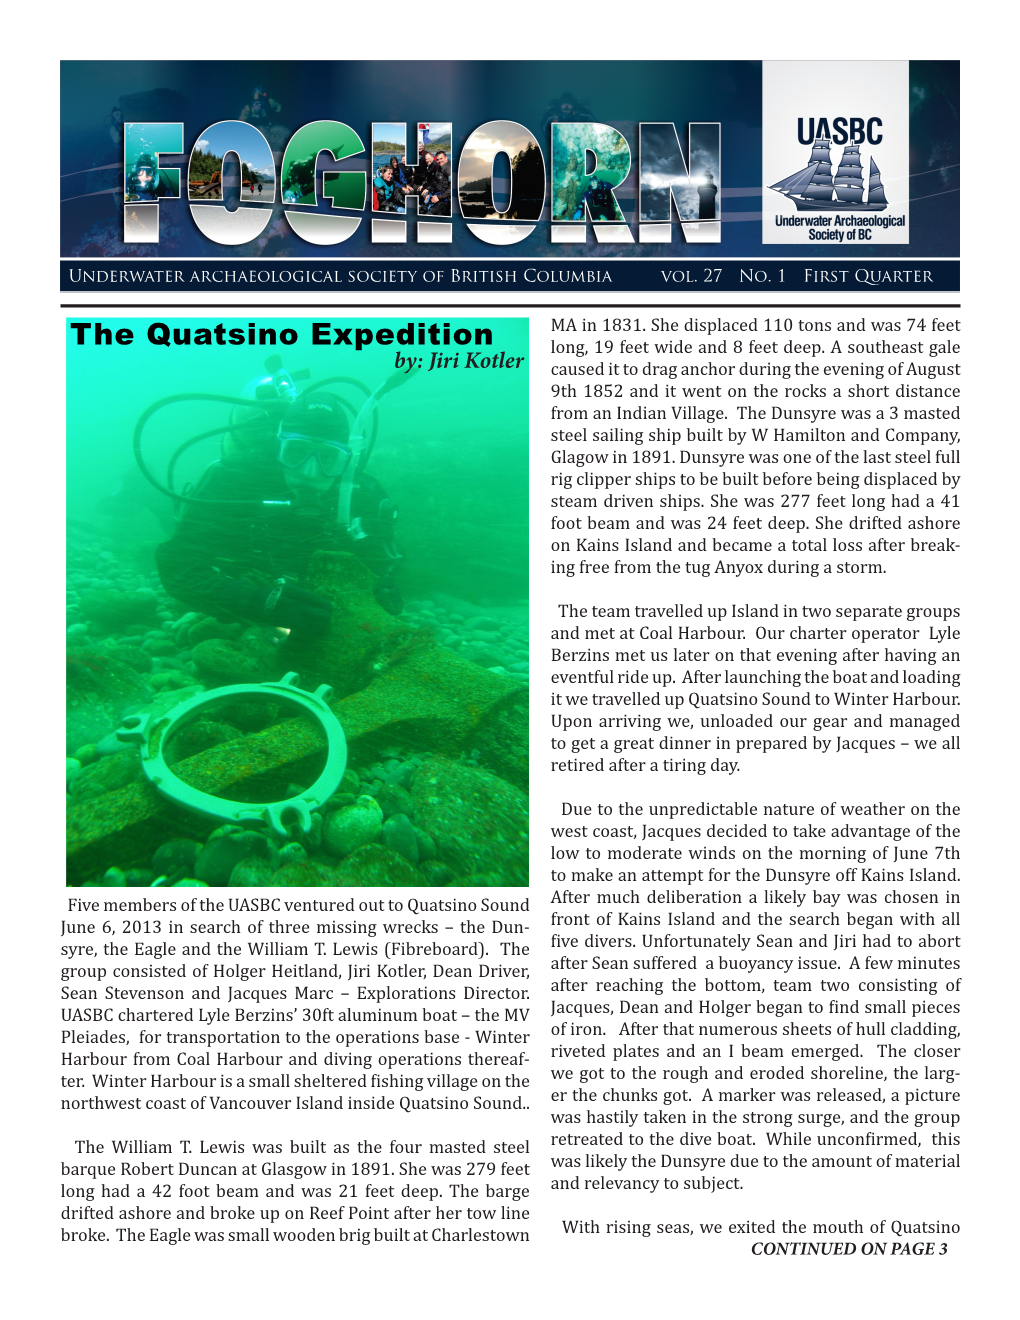 The Quatsino Expedition Long, 19 Feet Wide and 8 Feet Deep